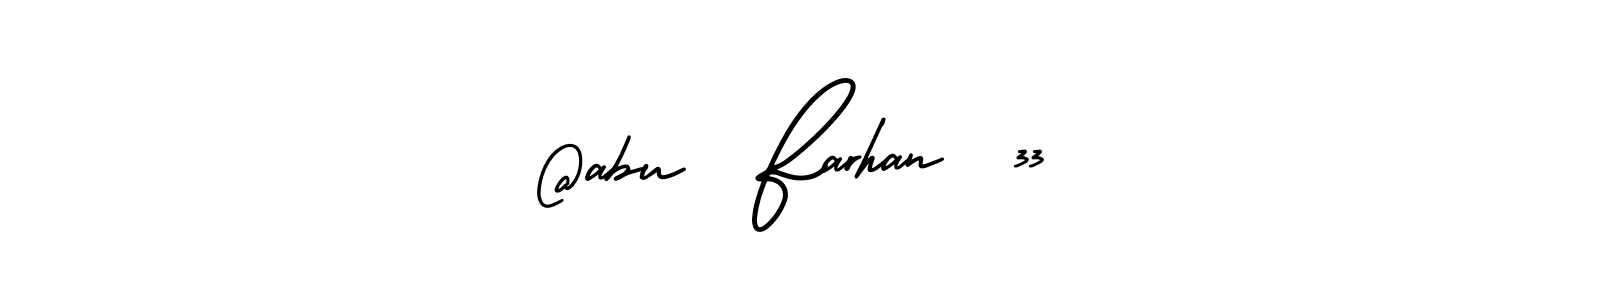 How to make @abu  Farhan  33 signature? AmerikaSignatureDemo-Regular is a professional autograph style. Create handwritten signature for @abu  Farhan  33 name. @abu  Farhan  33 signature style 3 images and pictures png